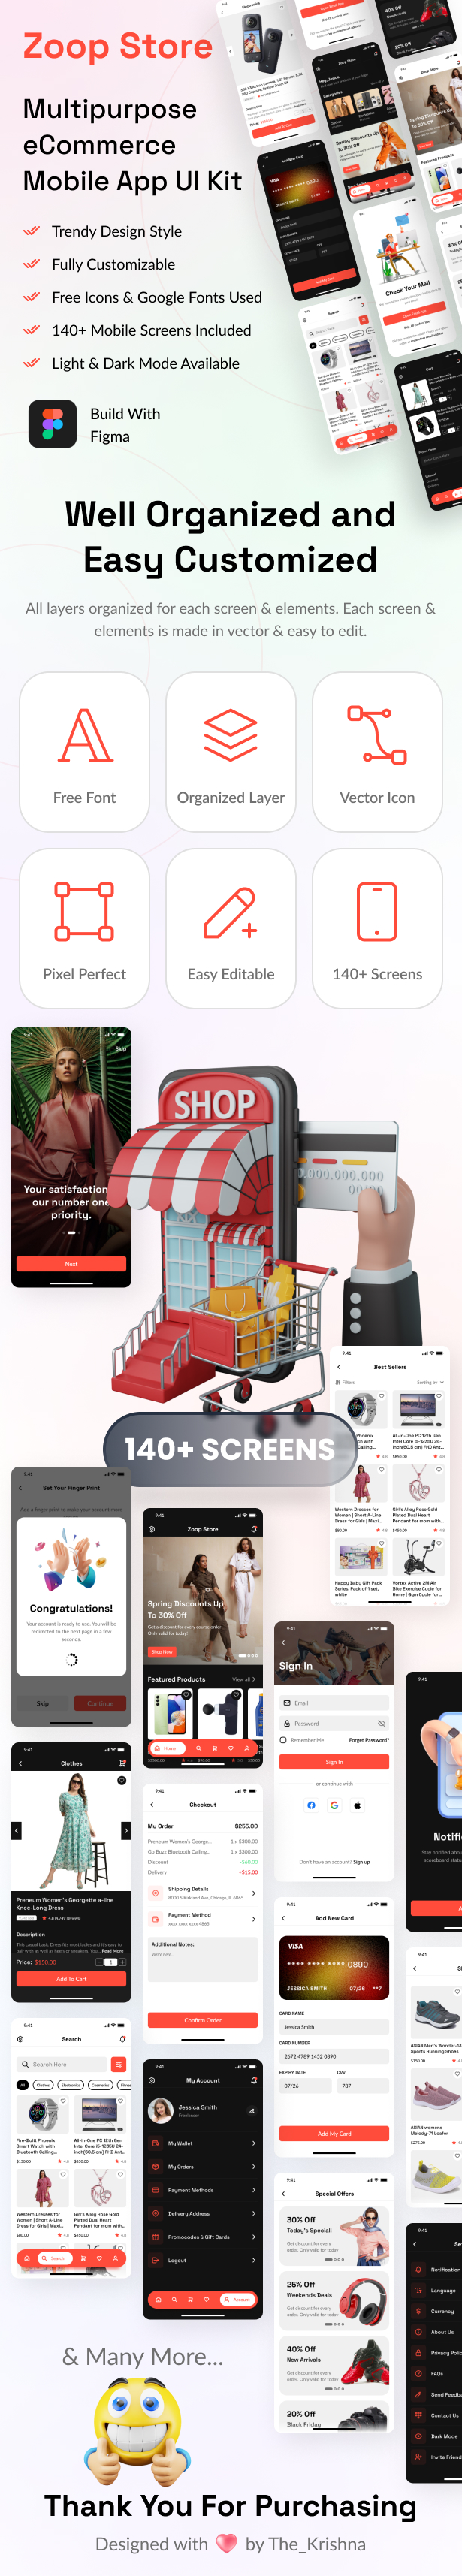 Multipurpose eCommerce Mobile App UI Kit Figma Template - Zoopstore - 4